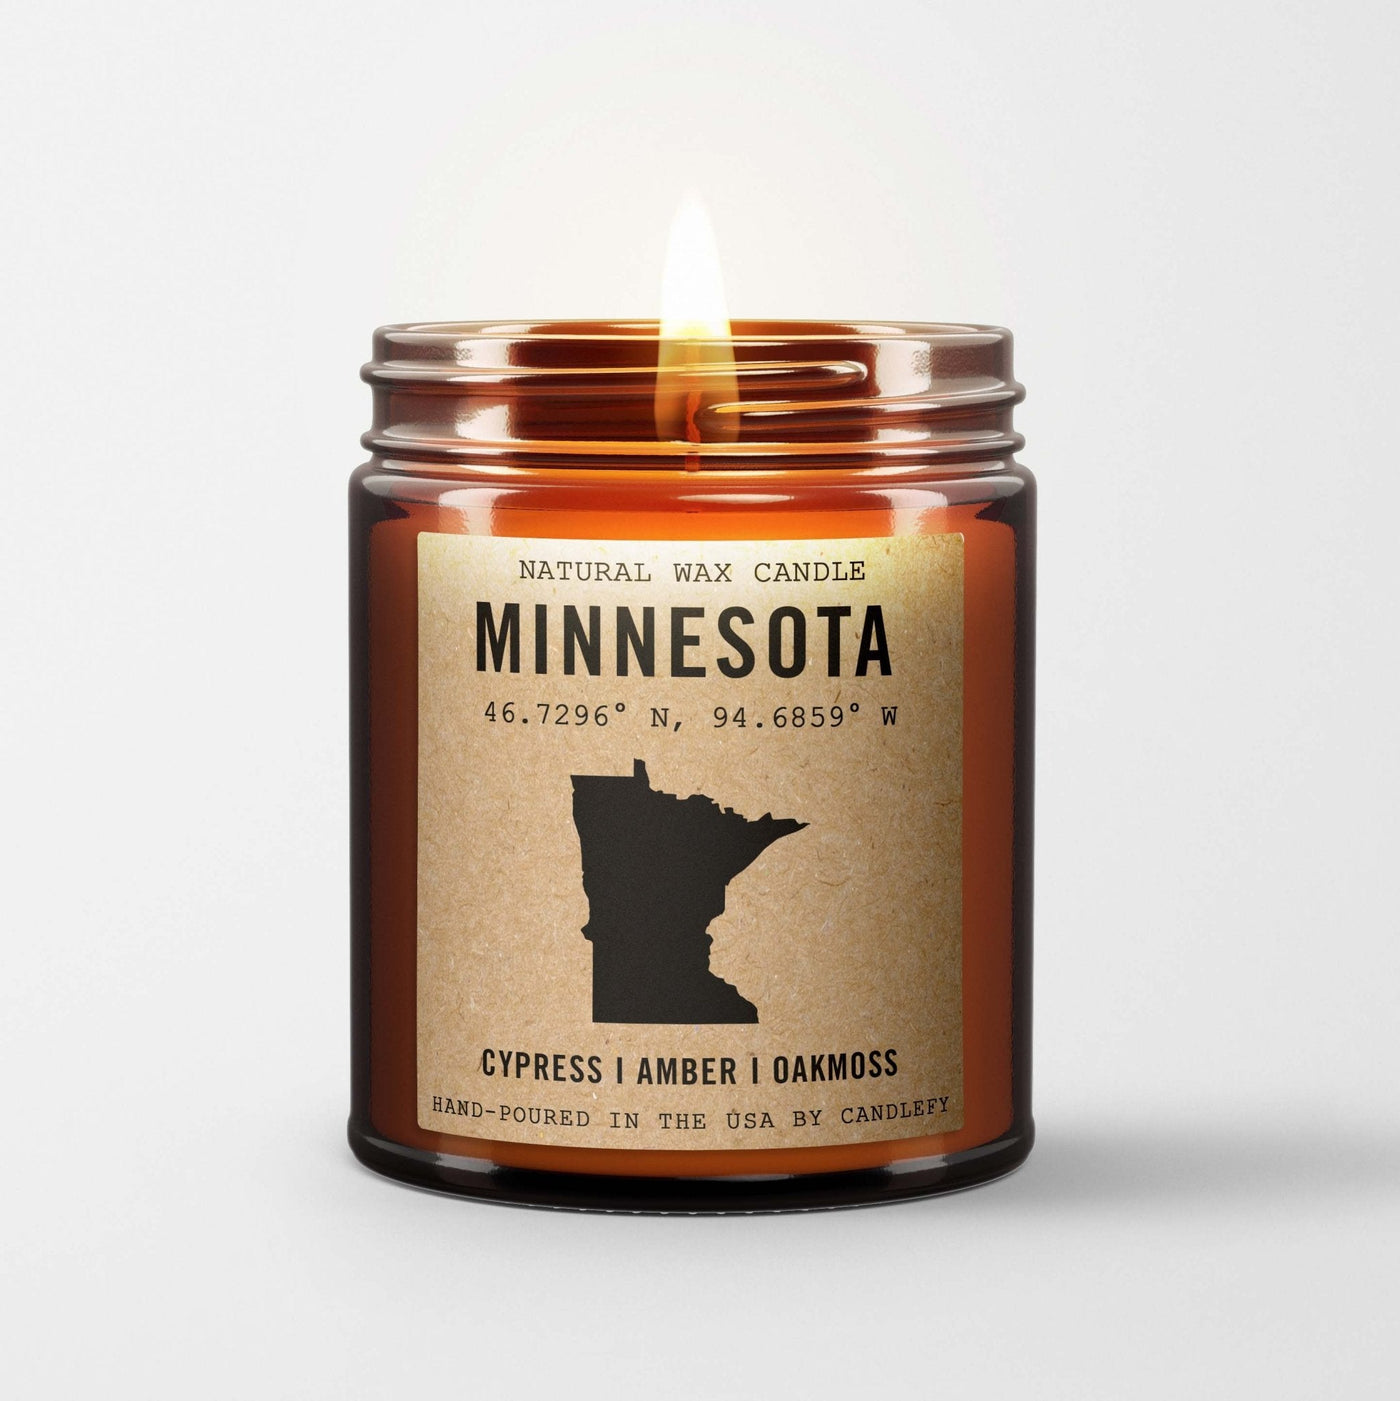 Minnesota Homestate Candle